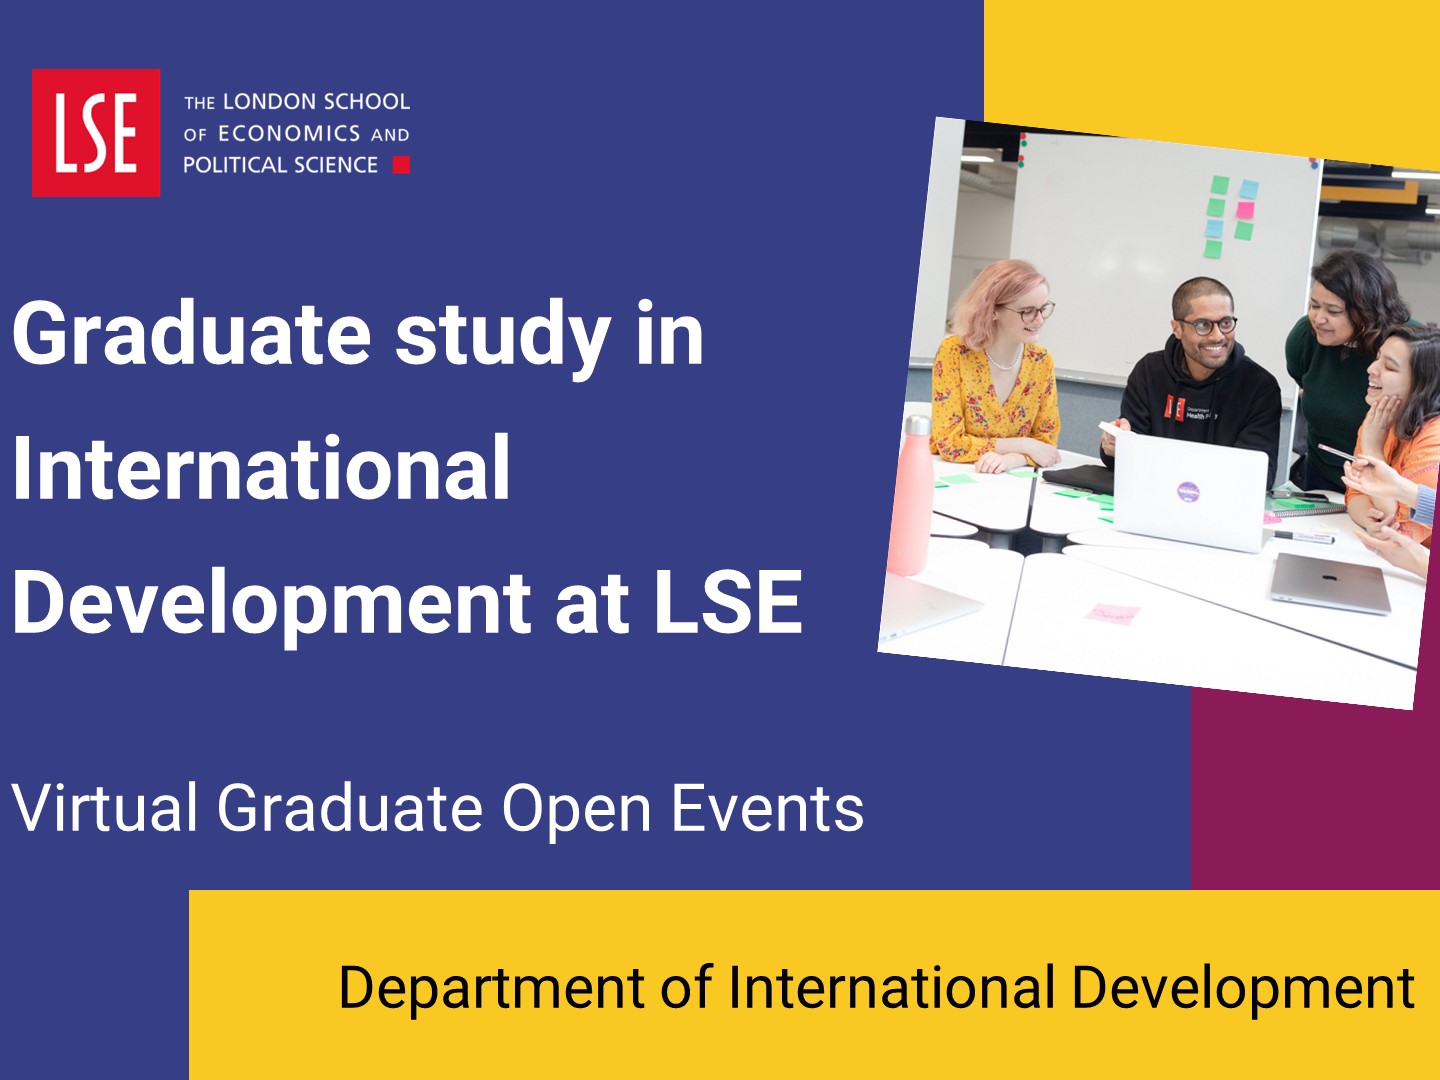 Introduction to Graduate study in International Development